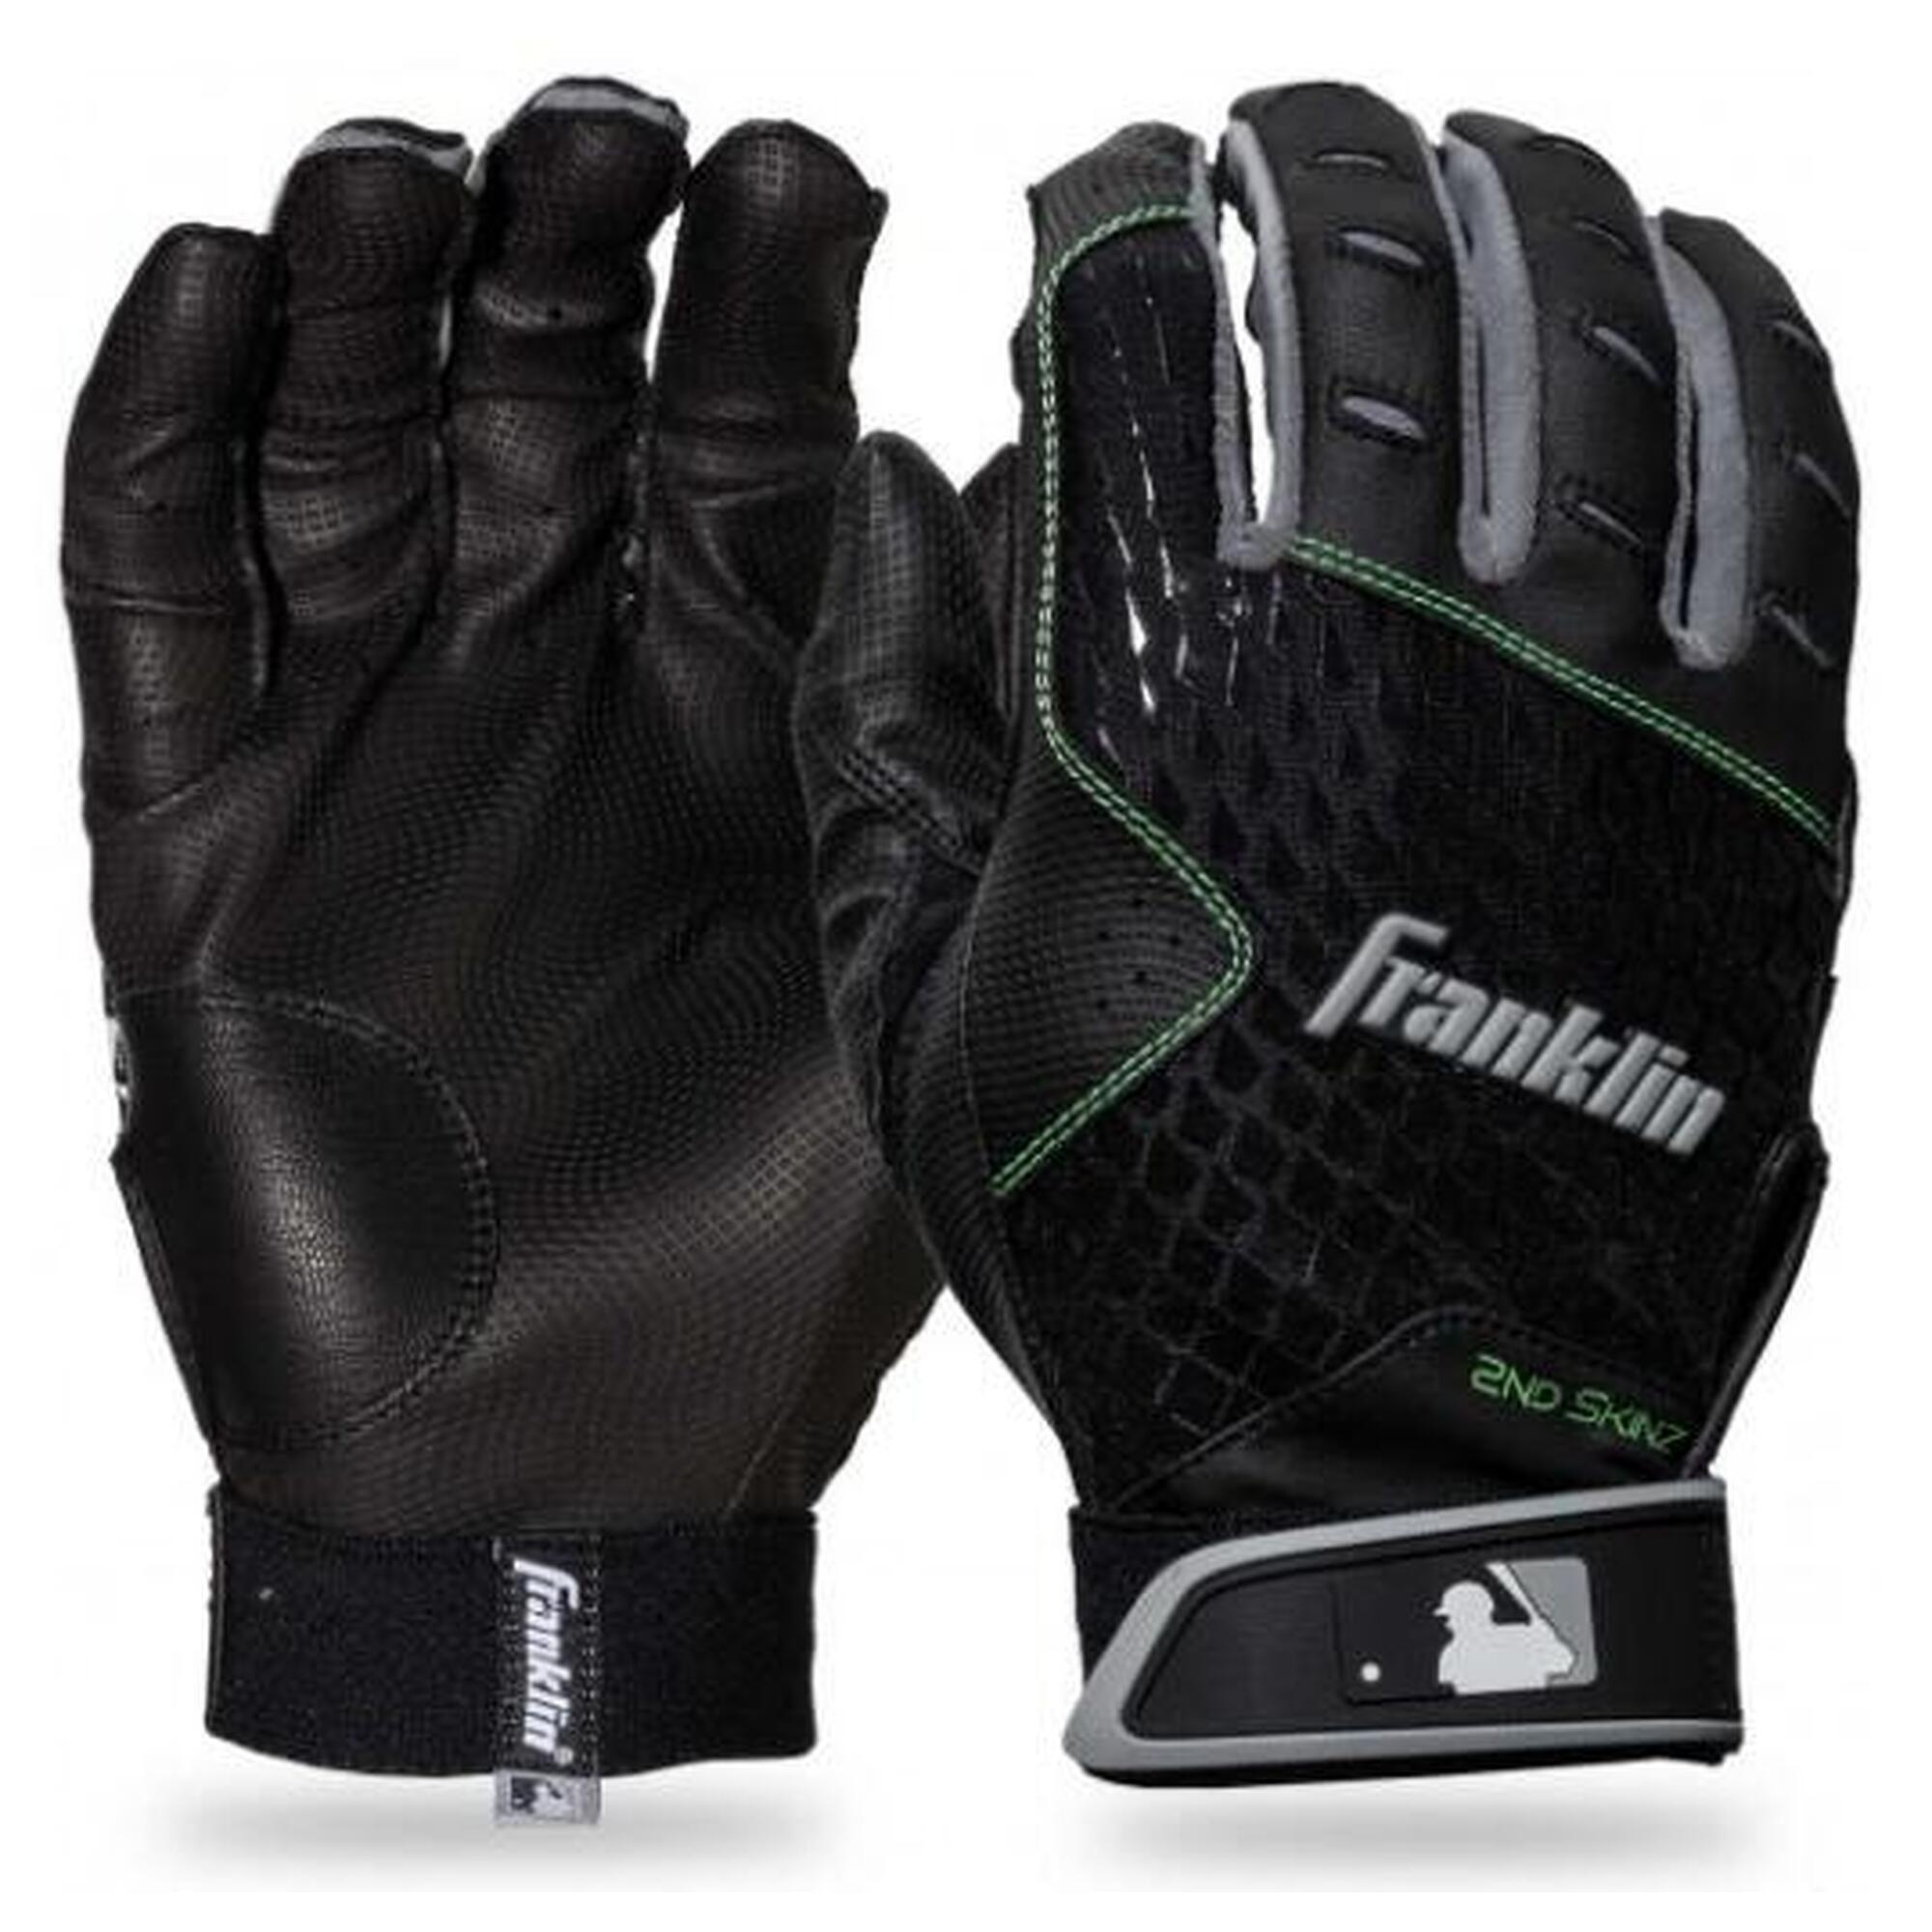 Baseball Batting Gloves - Softball - 2ND-SKINZ - (schwarz) - Erwachsene XL